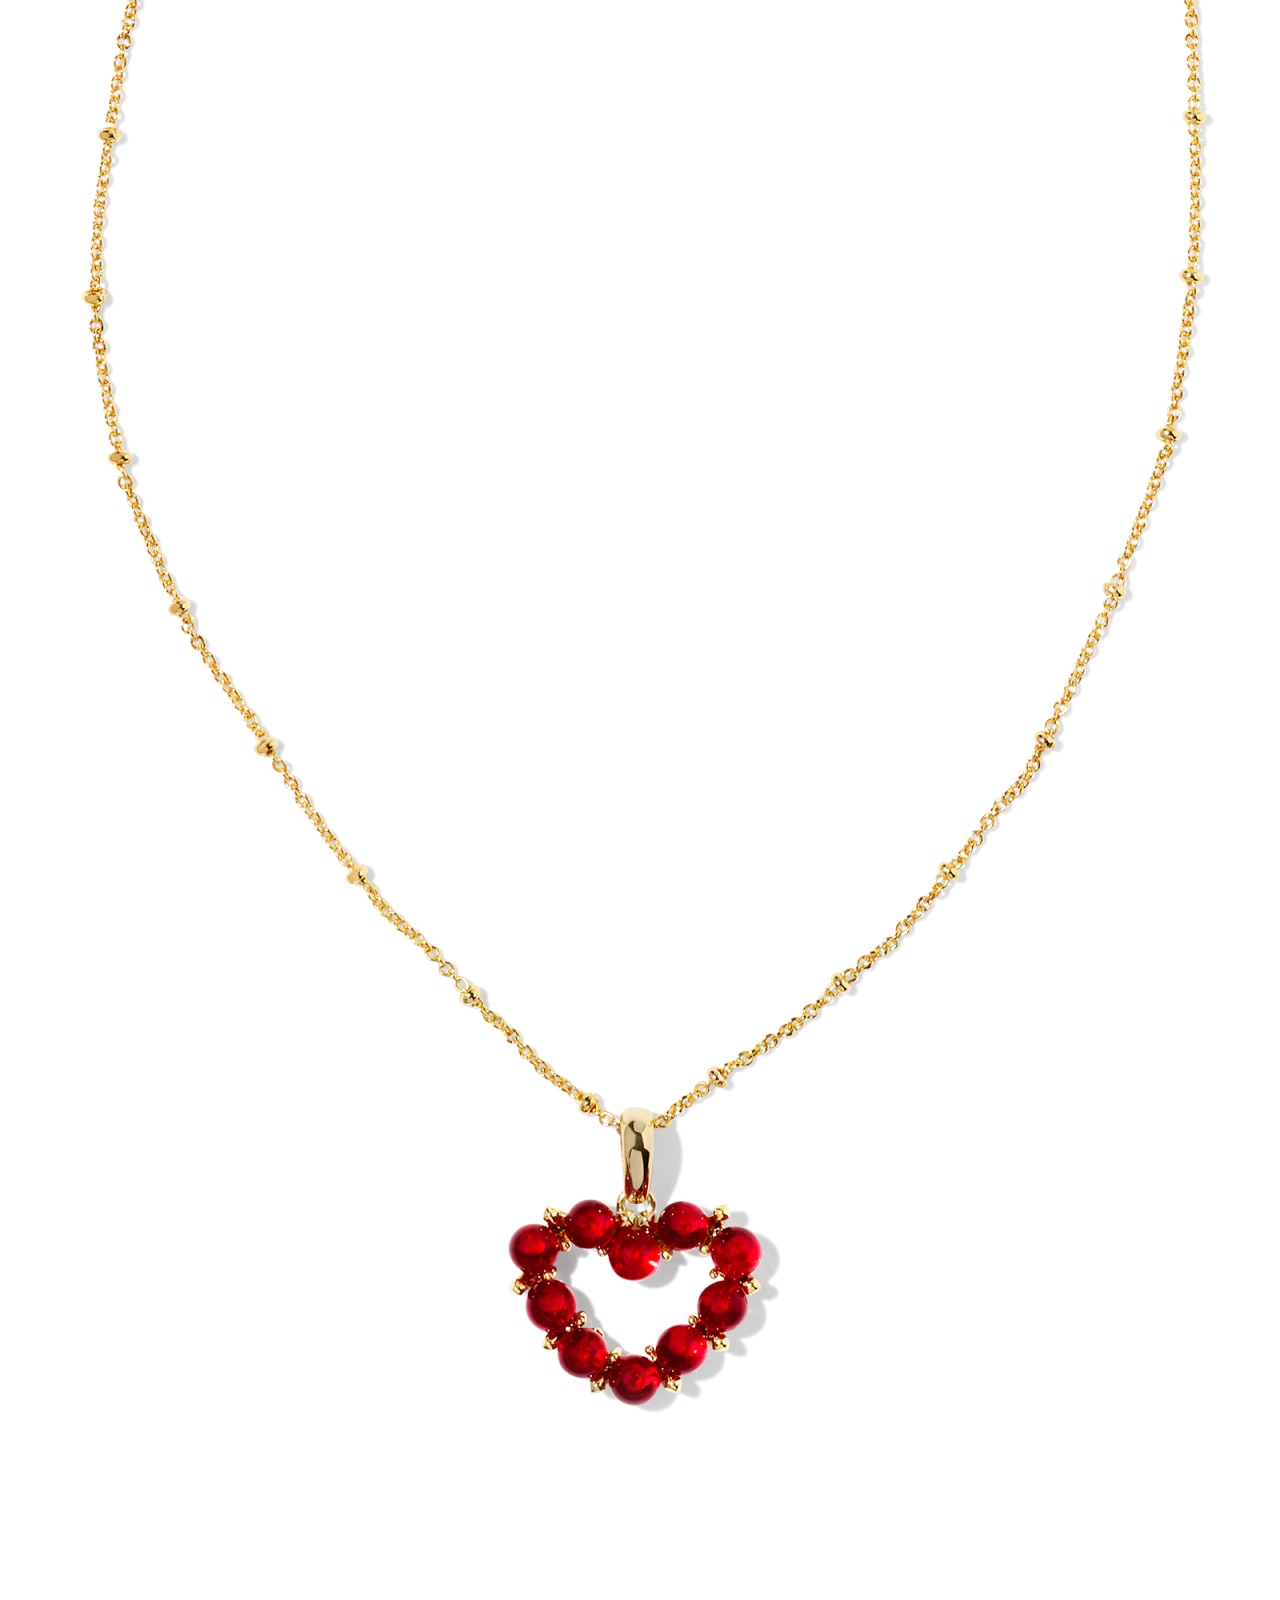 Ashton Gold Heart Short Pendant Necklace in Red Glass | Kendra Scott